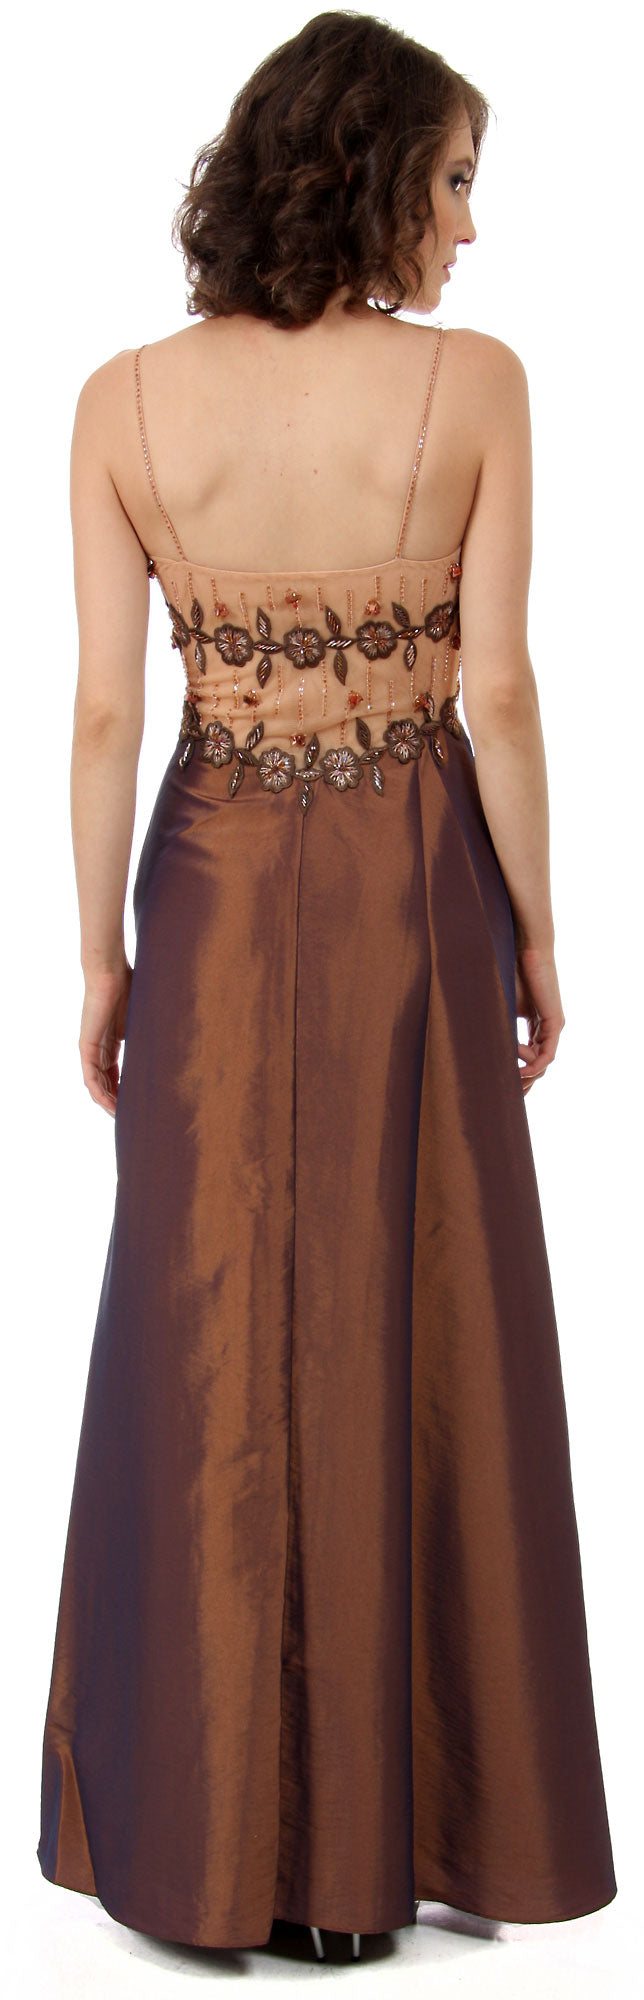 Back image of Sheer Mesh Top With Taffeta Overlap Skirt Formal Prom Dress